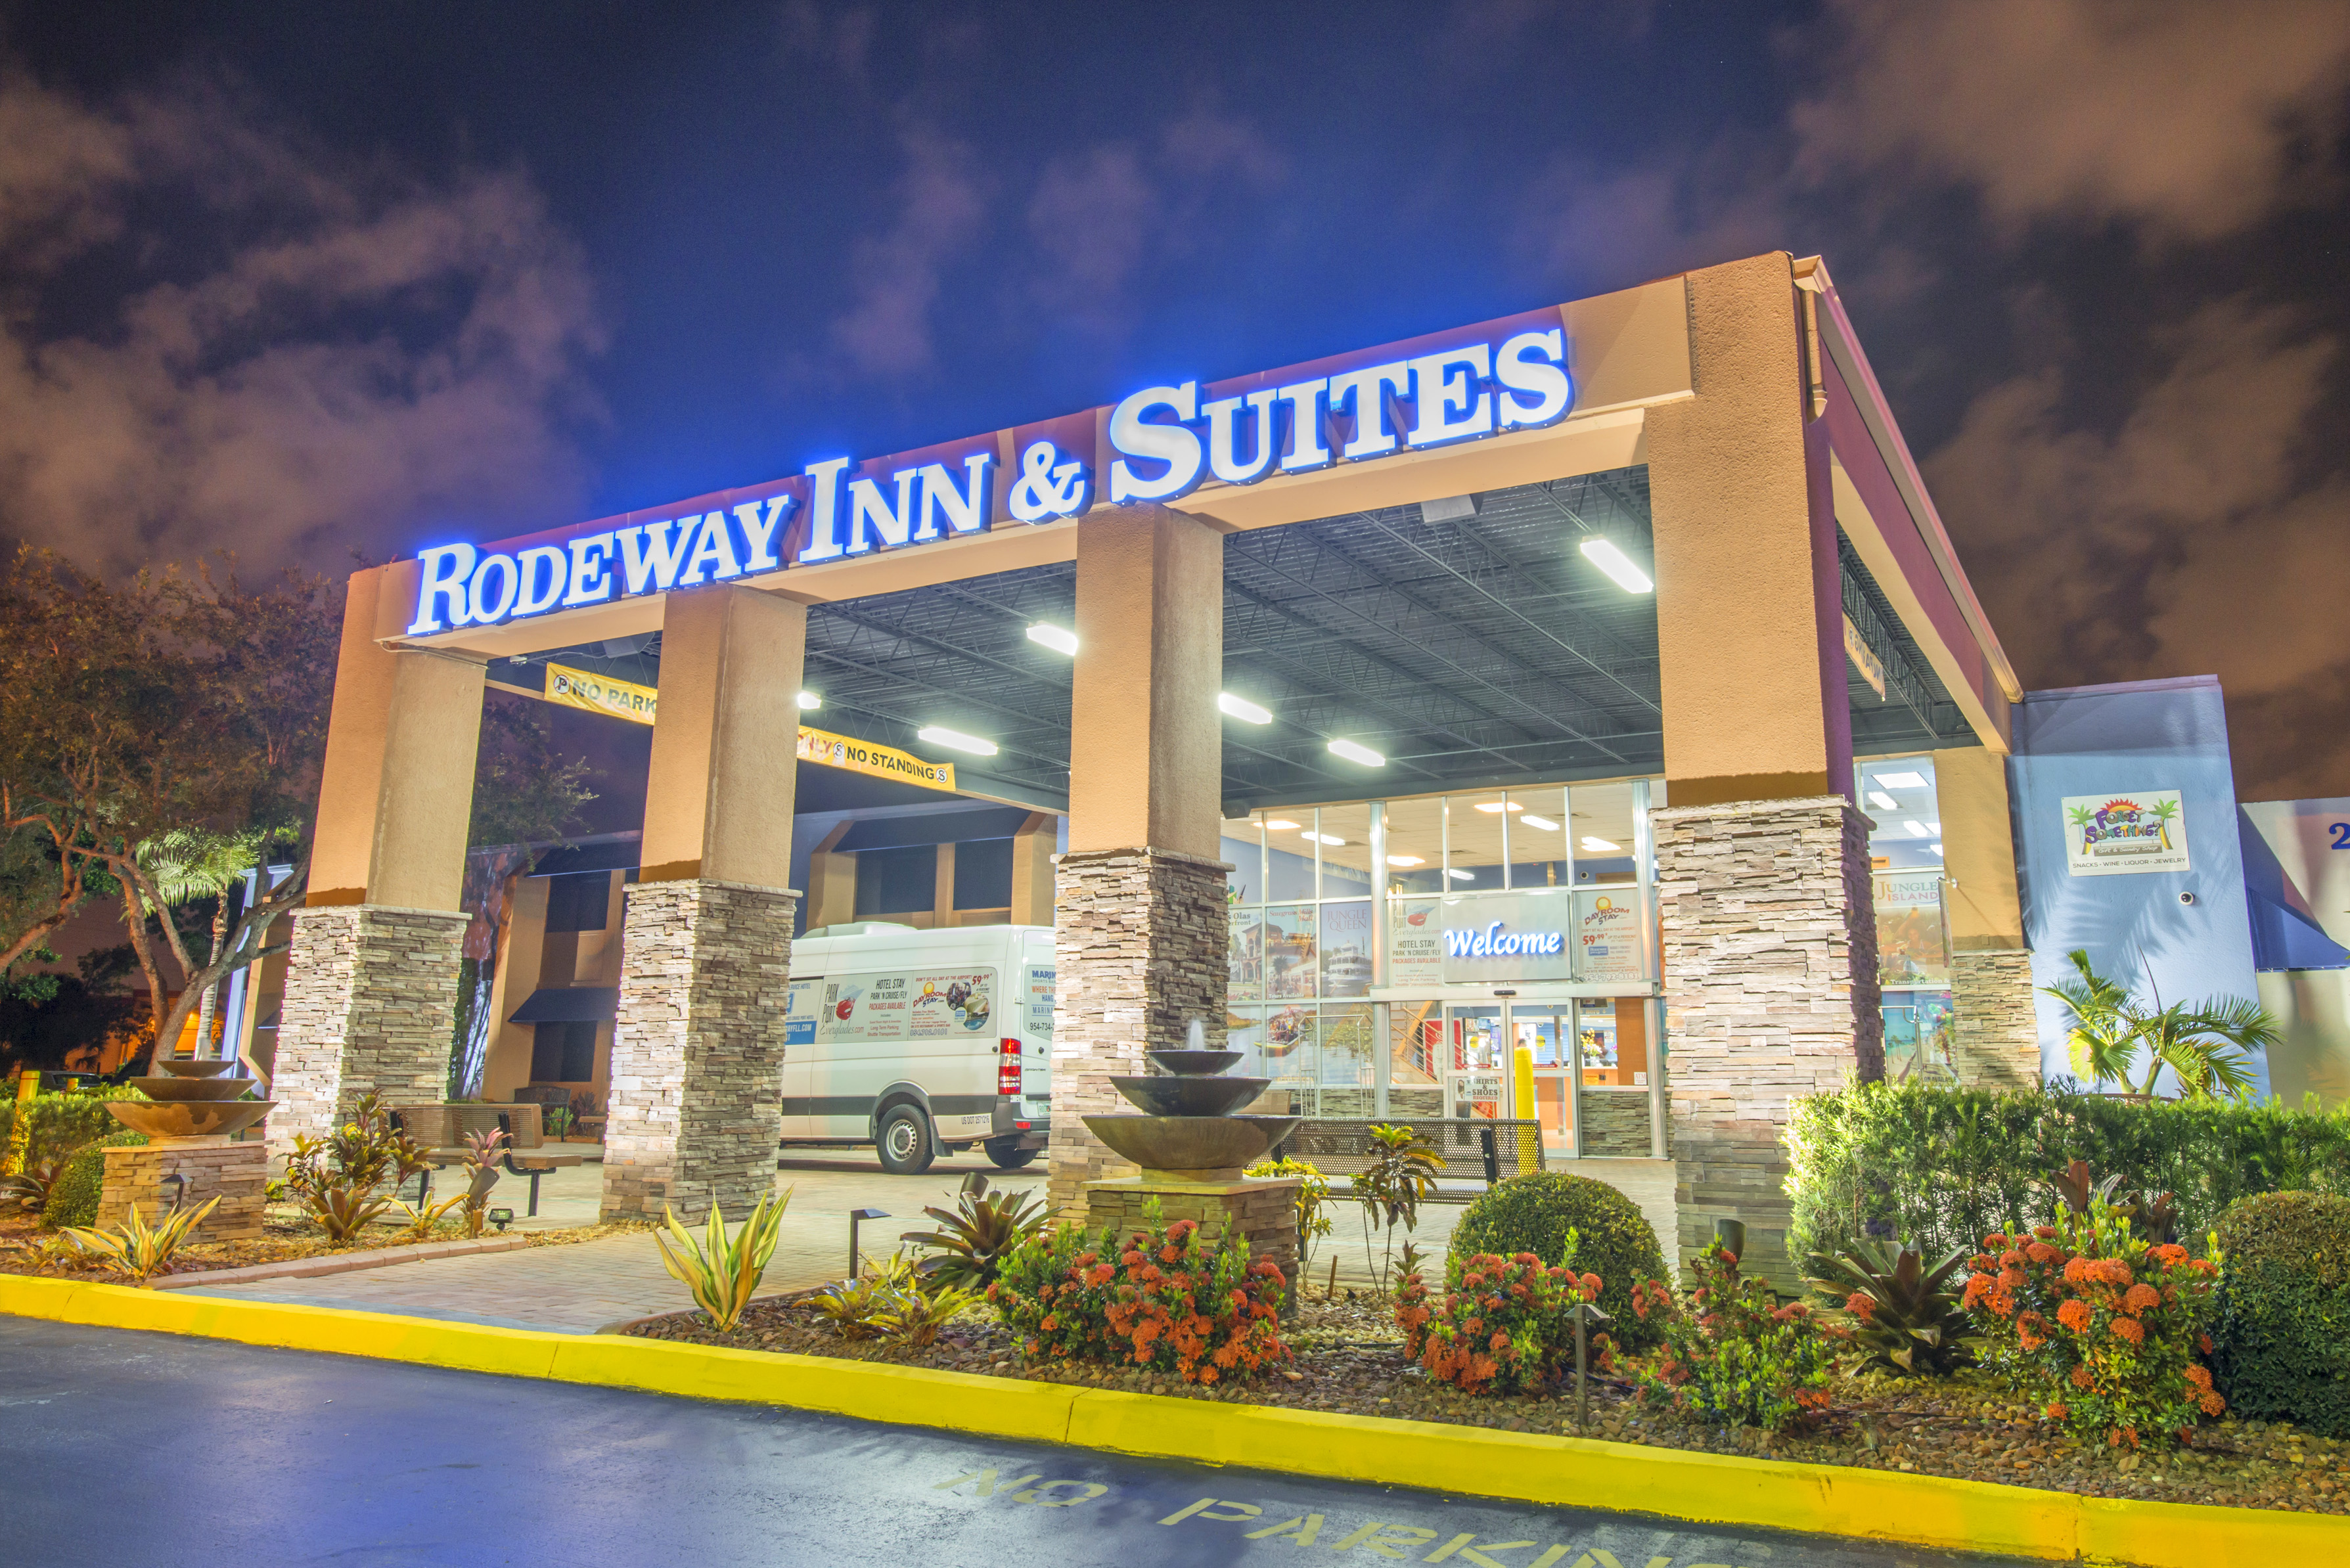 Rodeway Inn & Suites - Fort Lauderdale Airport & Port Everglades Cruise